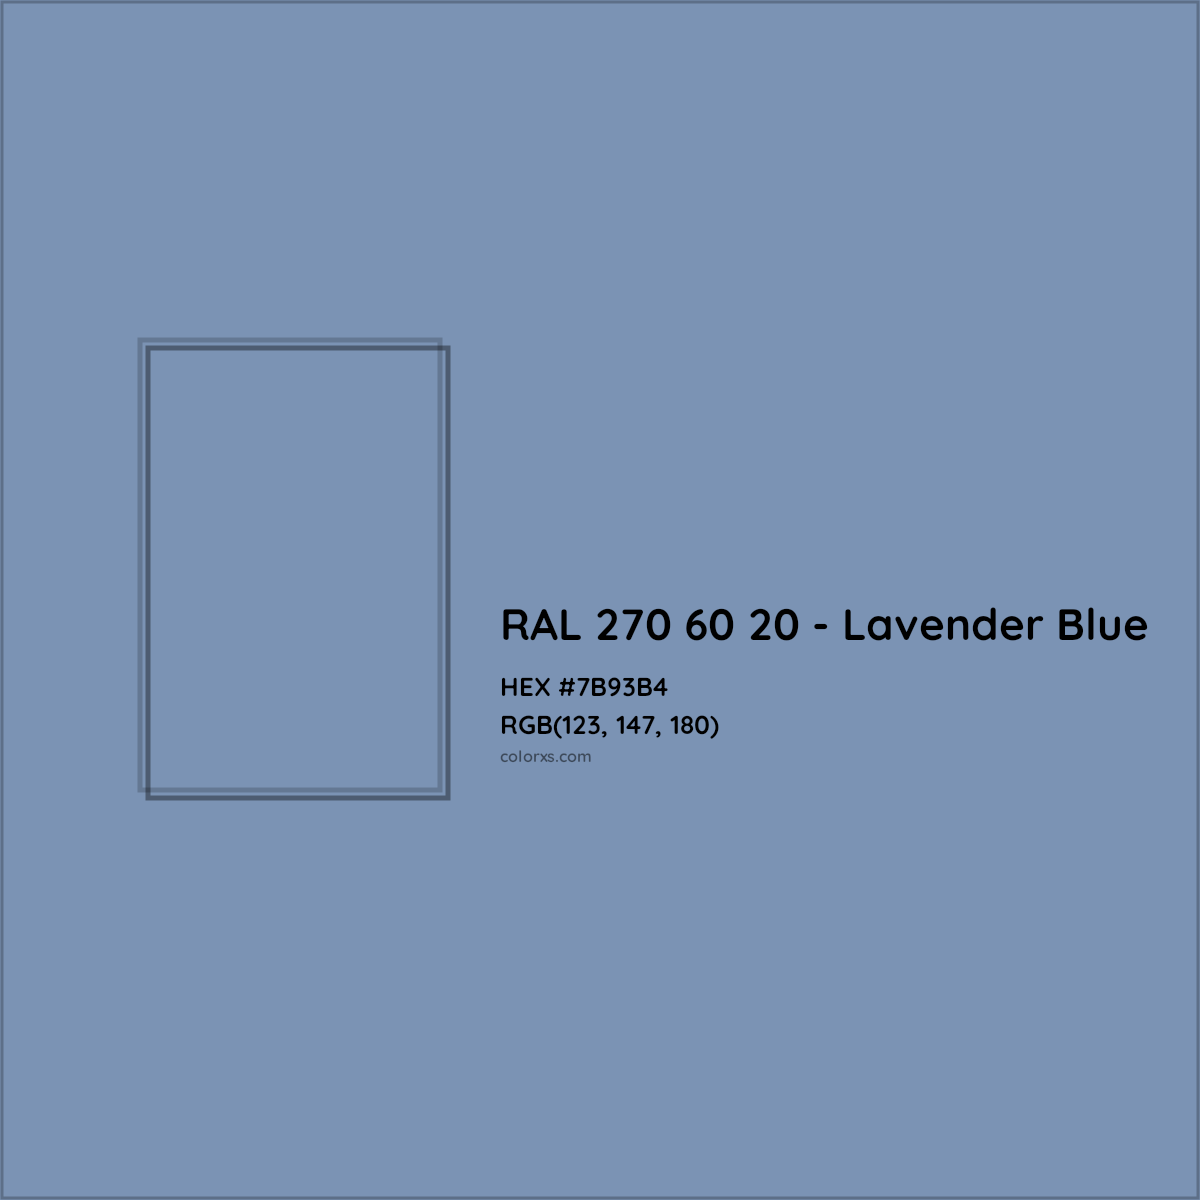 HEX #7B93B4 RAL 270 60 20 - Lavender Blue CMS RAL Design - Color Code